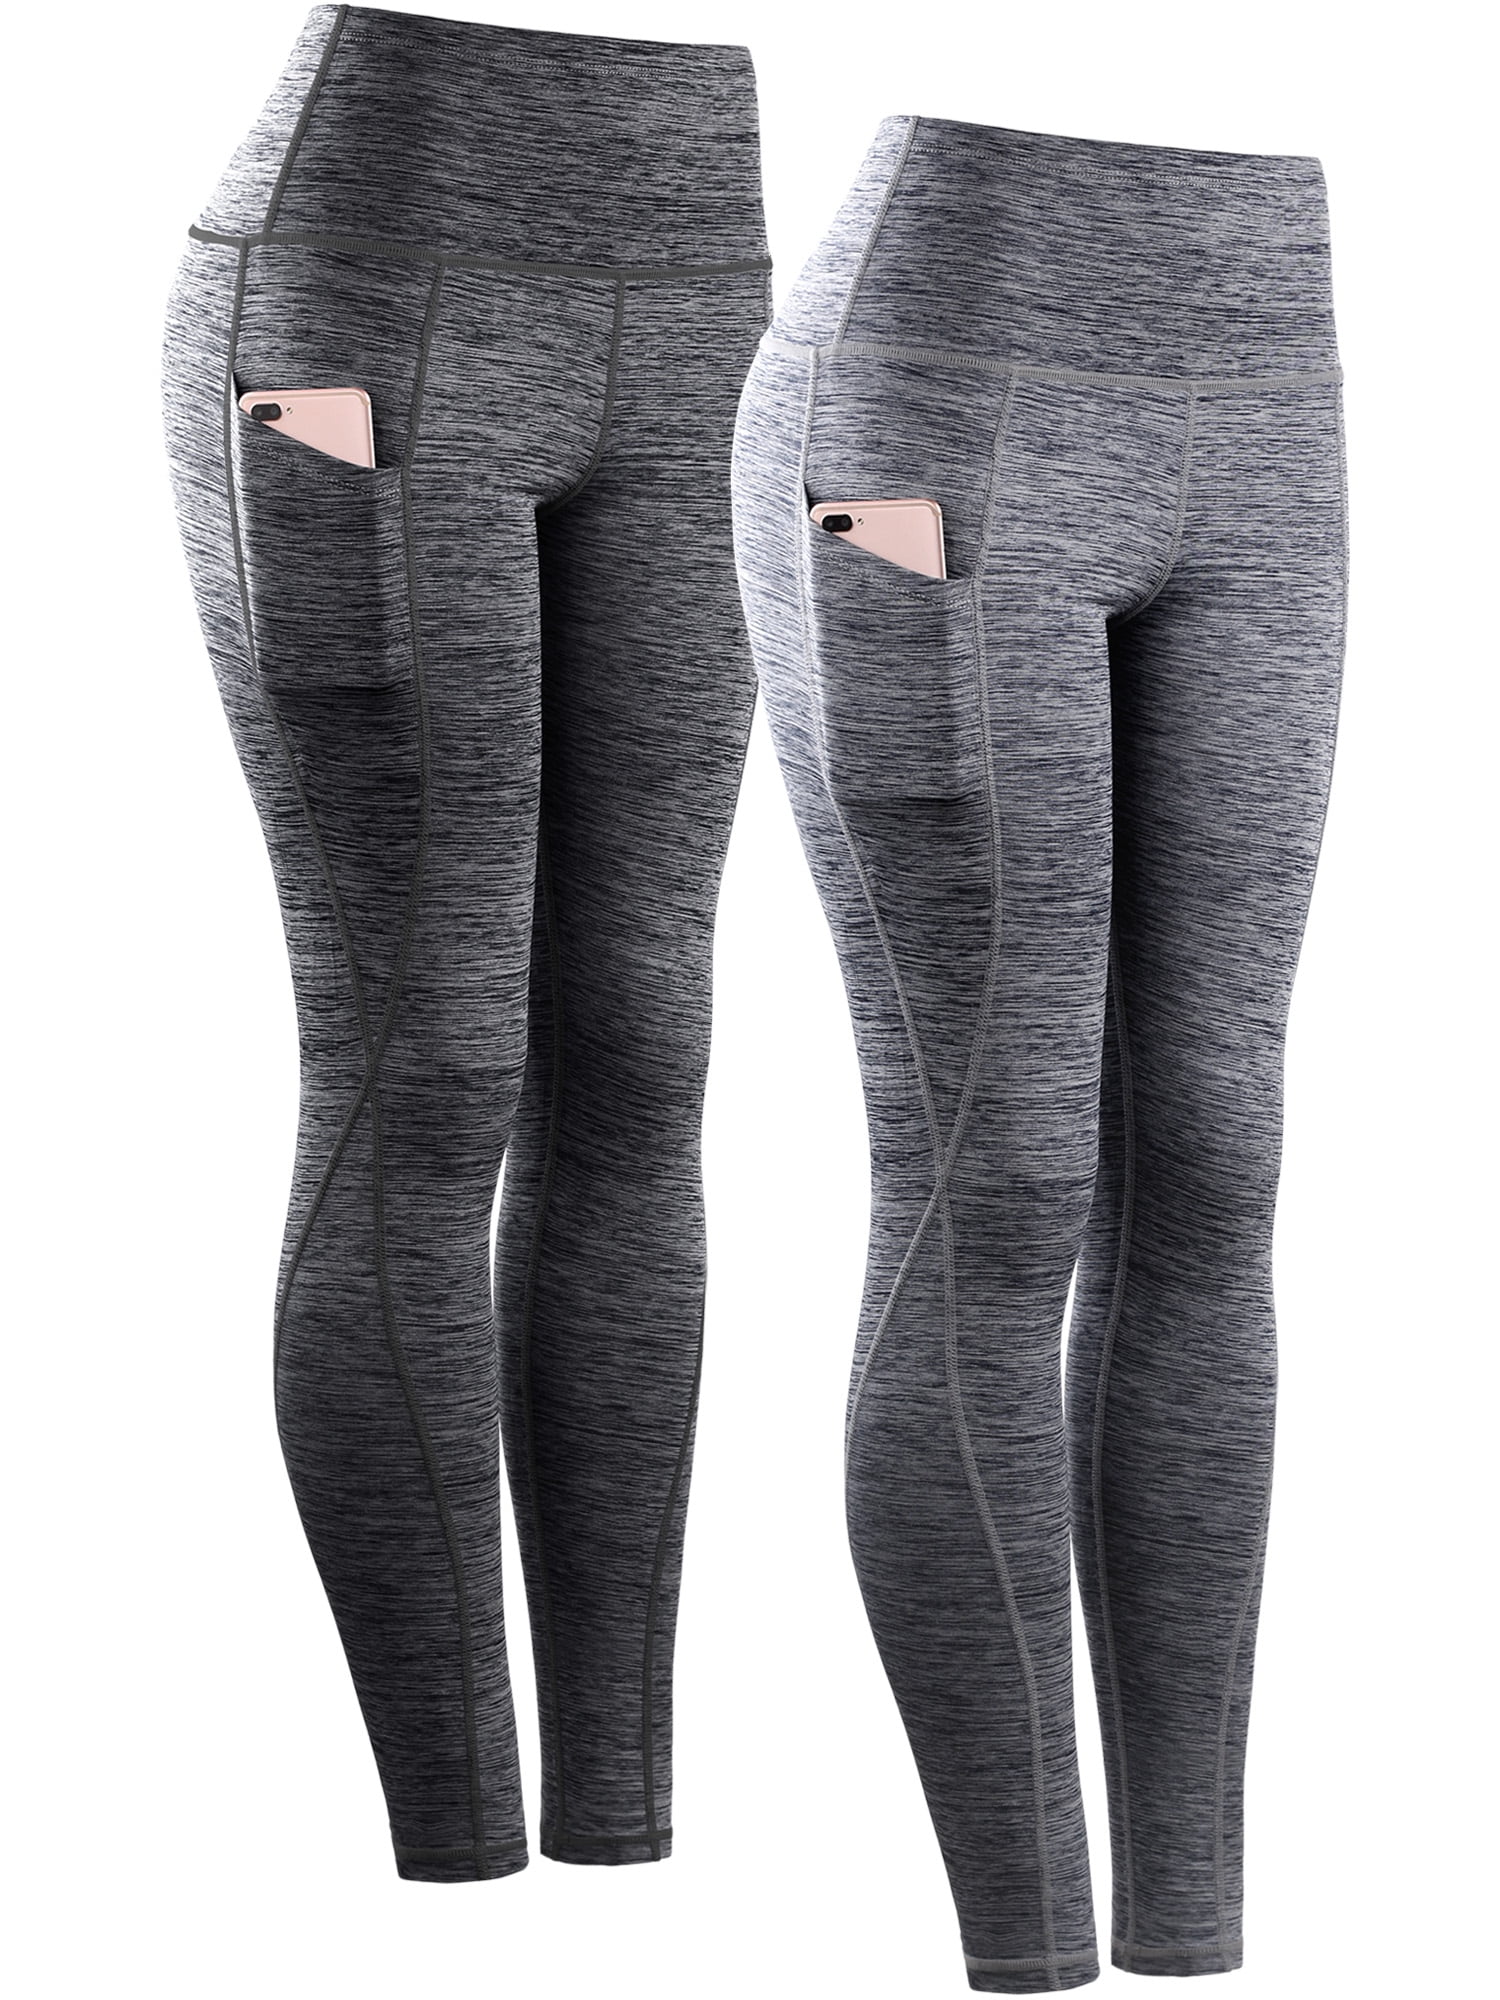 NELEUS Womens Yoga Running Leggings with Pocket Tummy Control High Waist, Black+Gray,US Size XL 